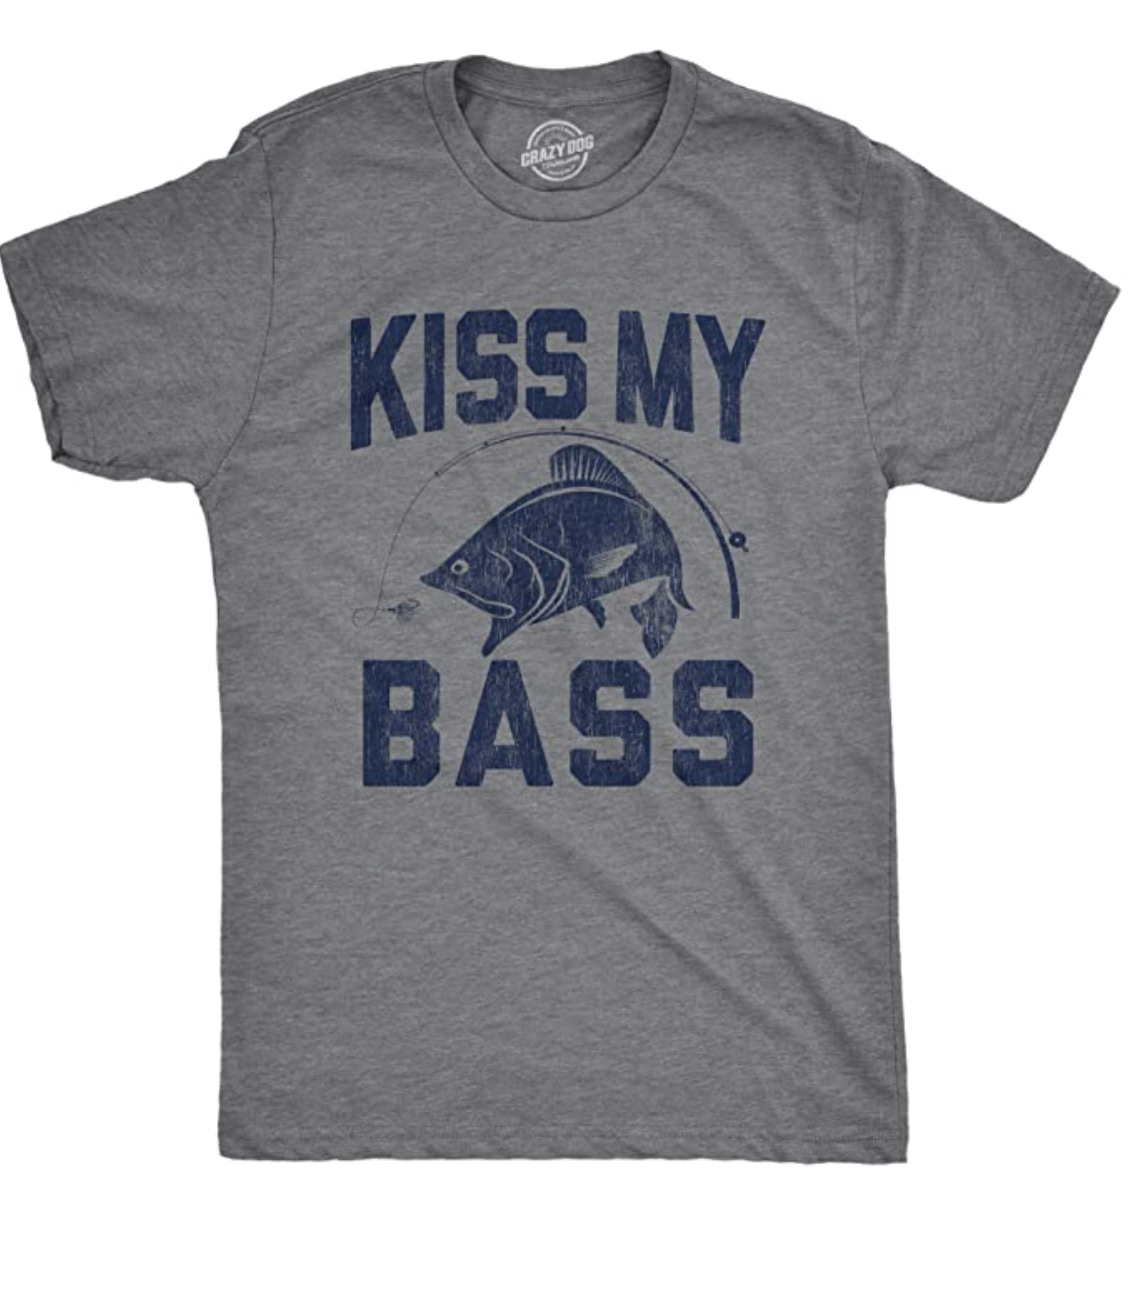 Mens Kiss My Bass Tshirt Funny Fishing Humor Kiss My Ass Graphic Tee